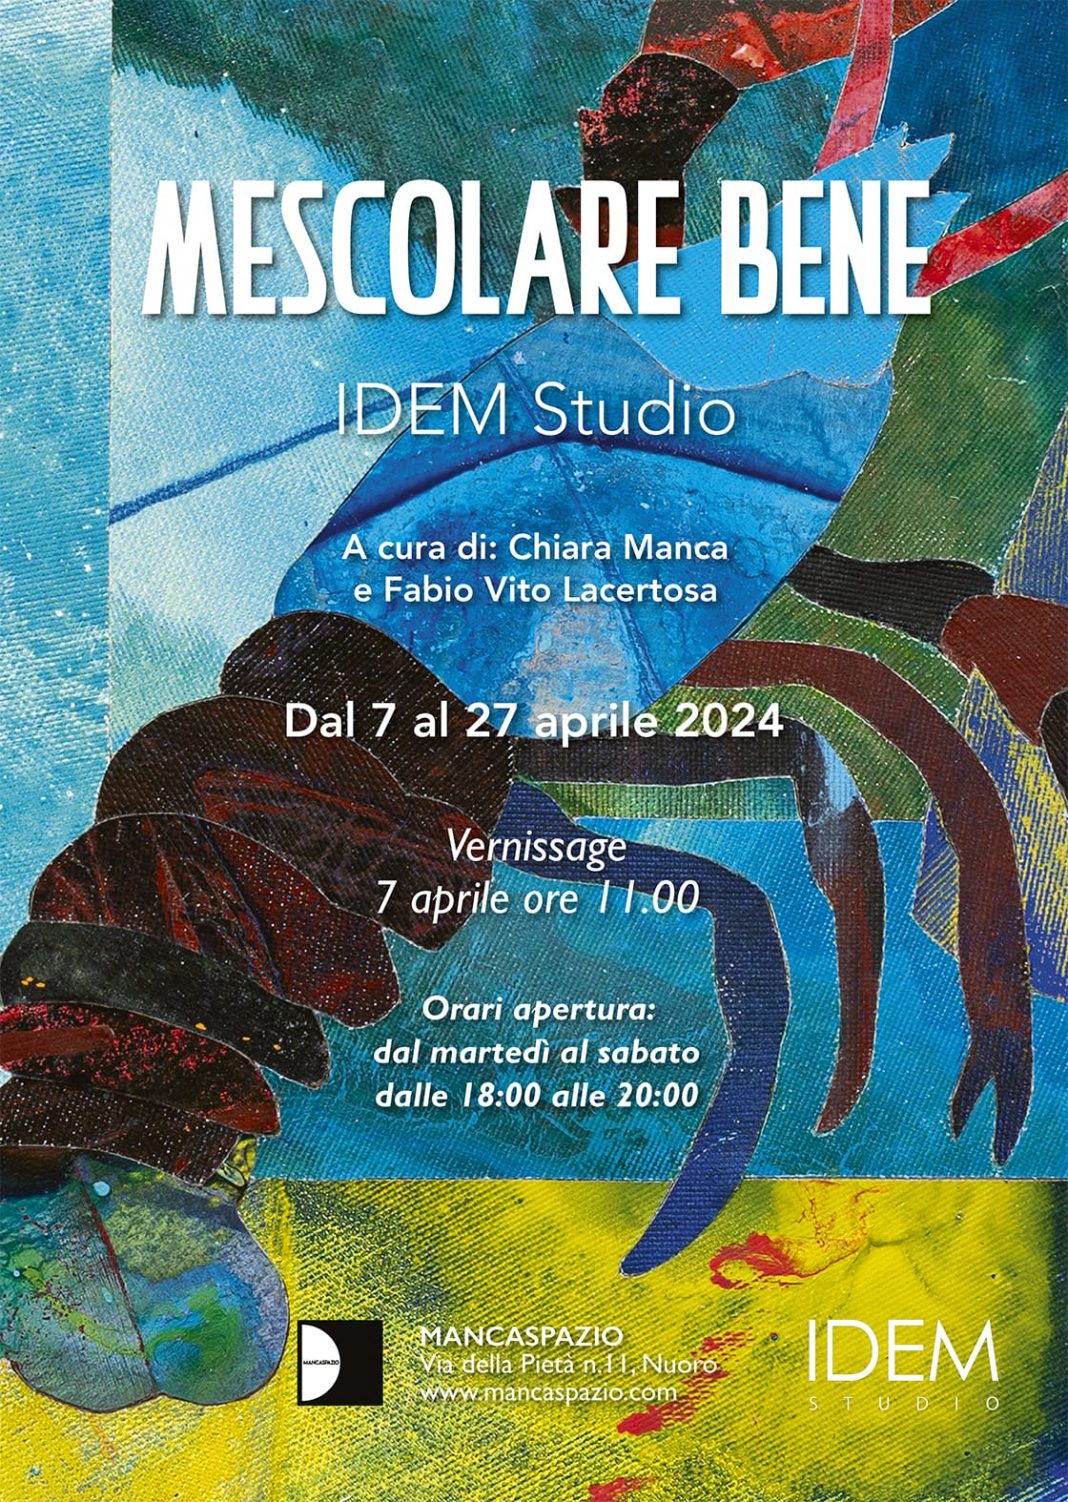 IDEM Studio – Mescolare benehttps://www.exibart.com/repository/media/formidable/11/img/135/Locandina-1068x1502.jpeg